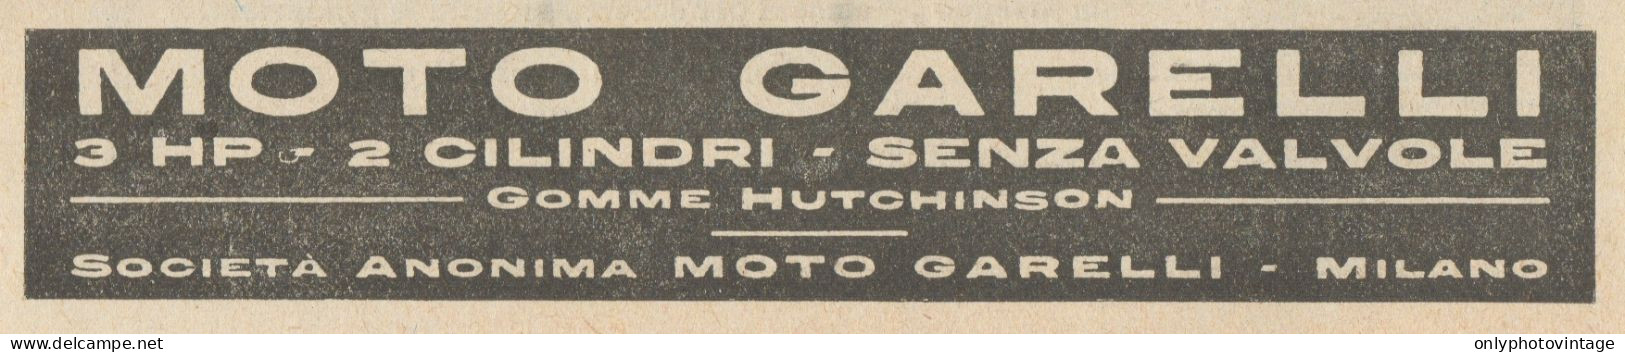 Moto GARELLI - Gomme Hutchinson - Pubblicità D'epoca - 1922 Old Advert - Publicidad